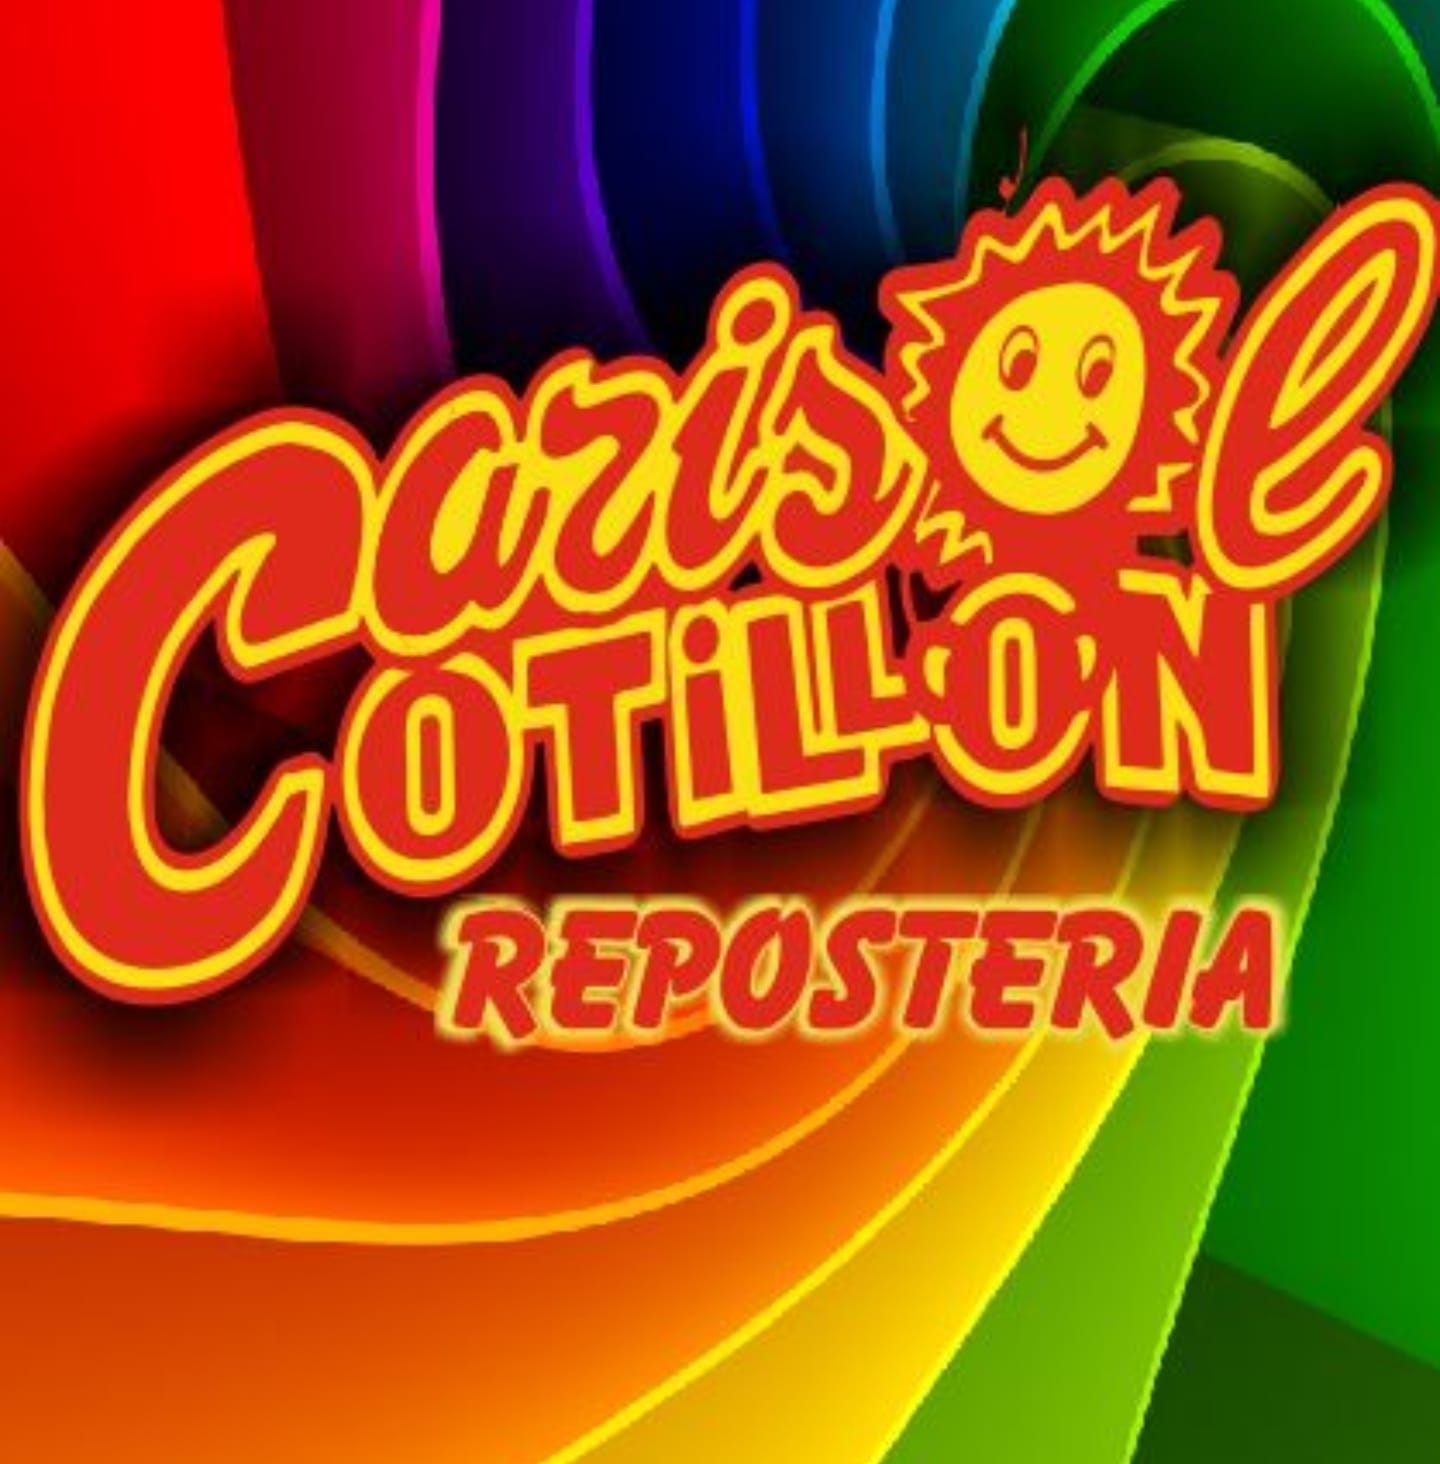 Carisol Cotillon